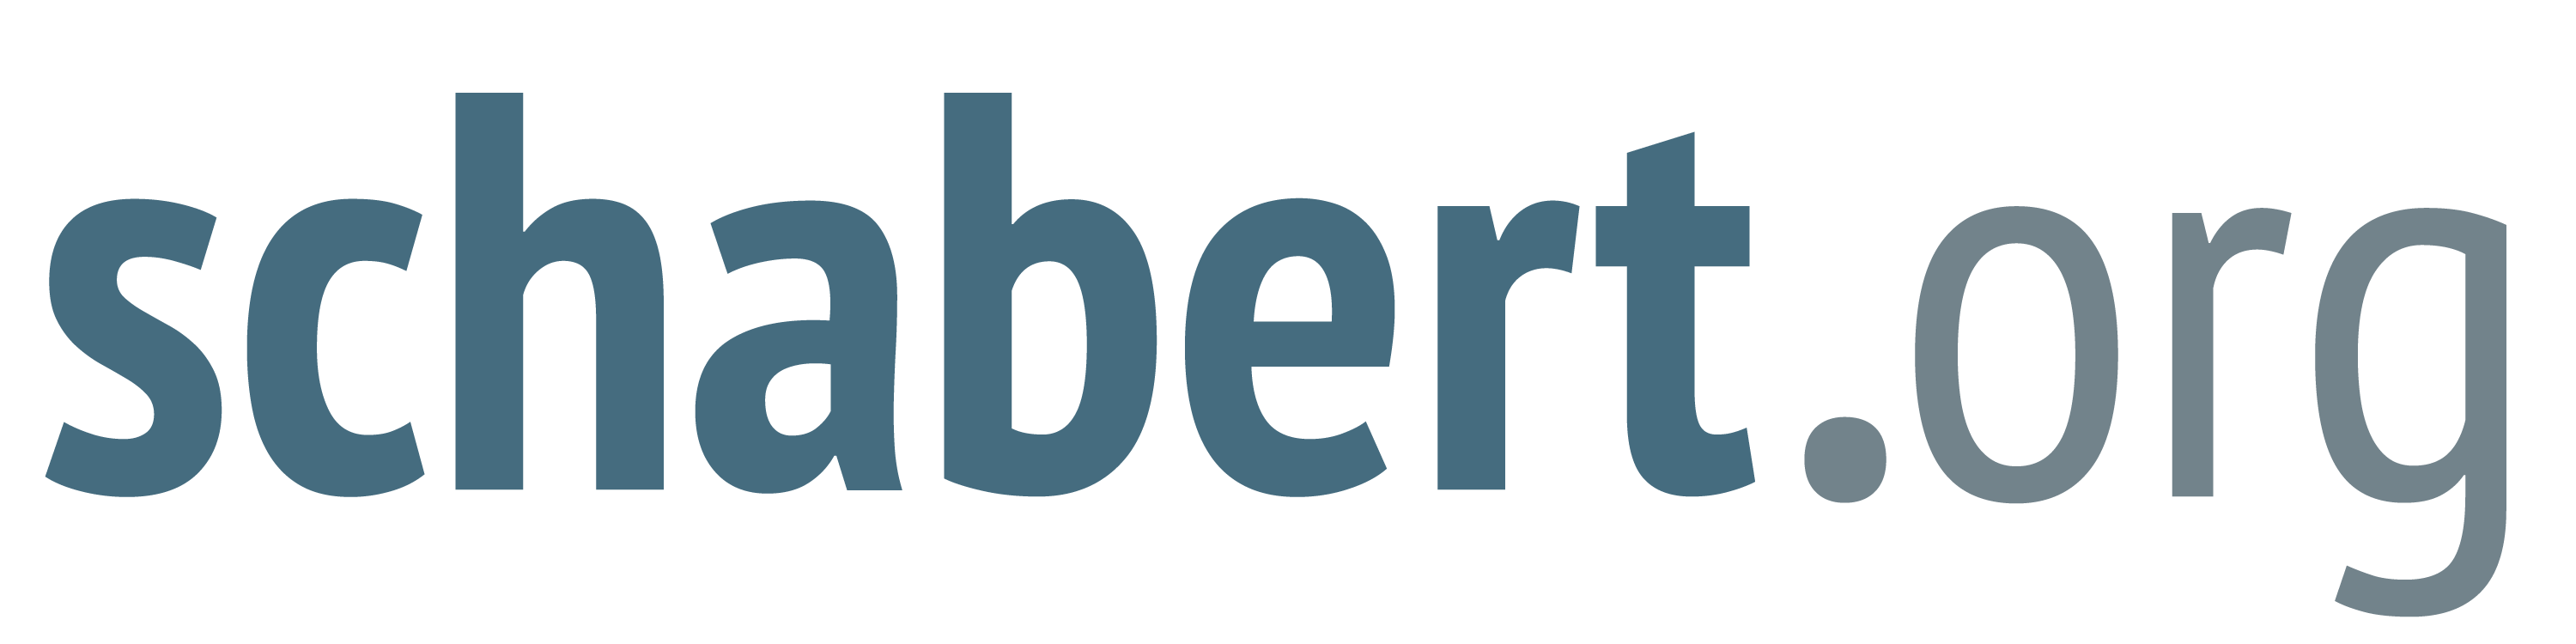 Logo_schabertorg_3